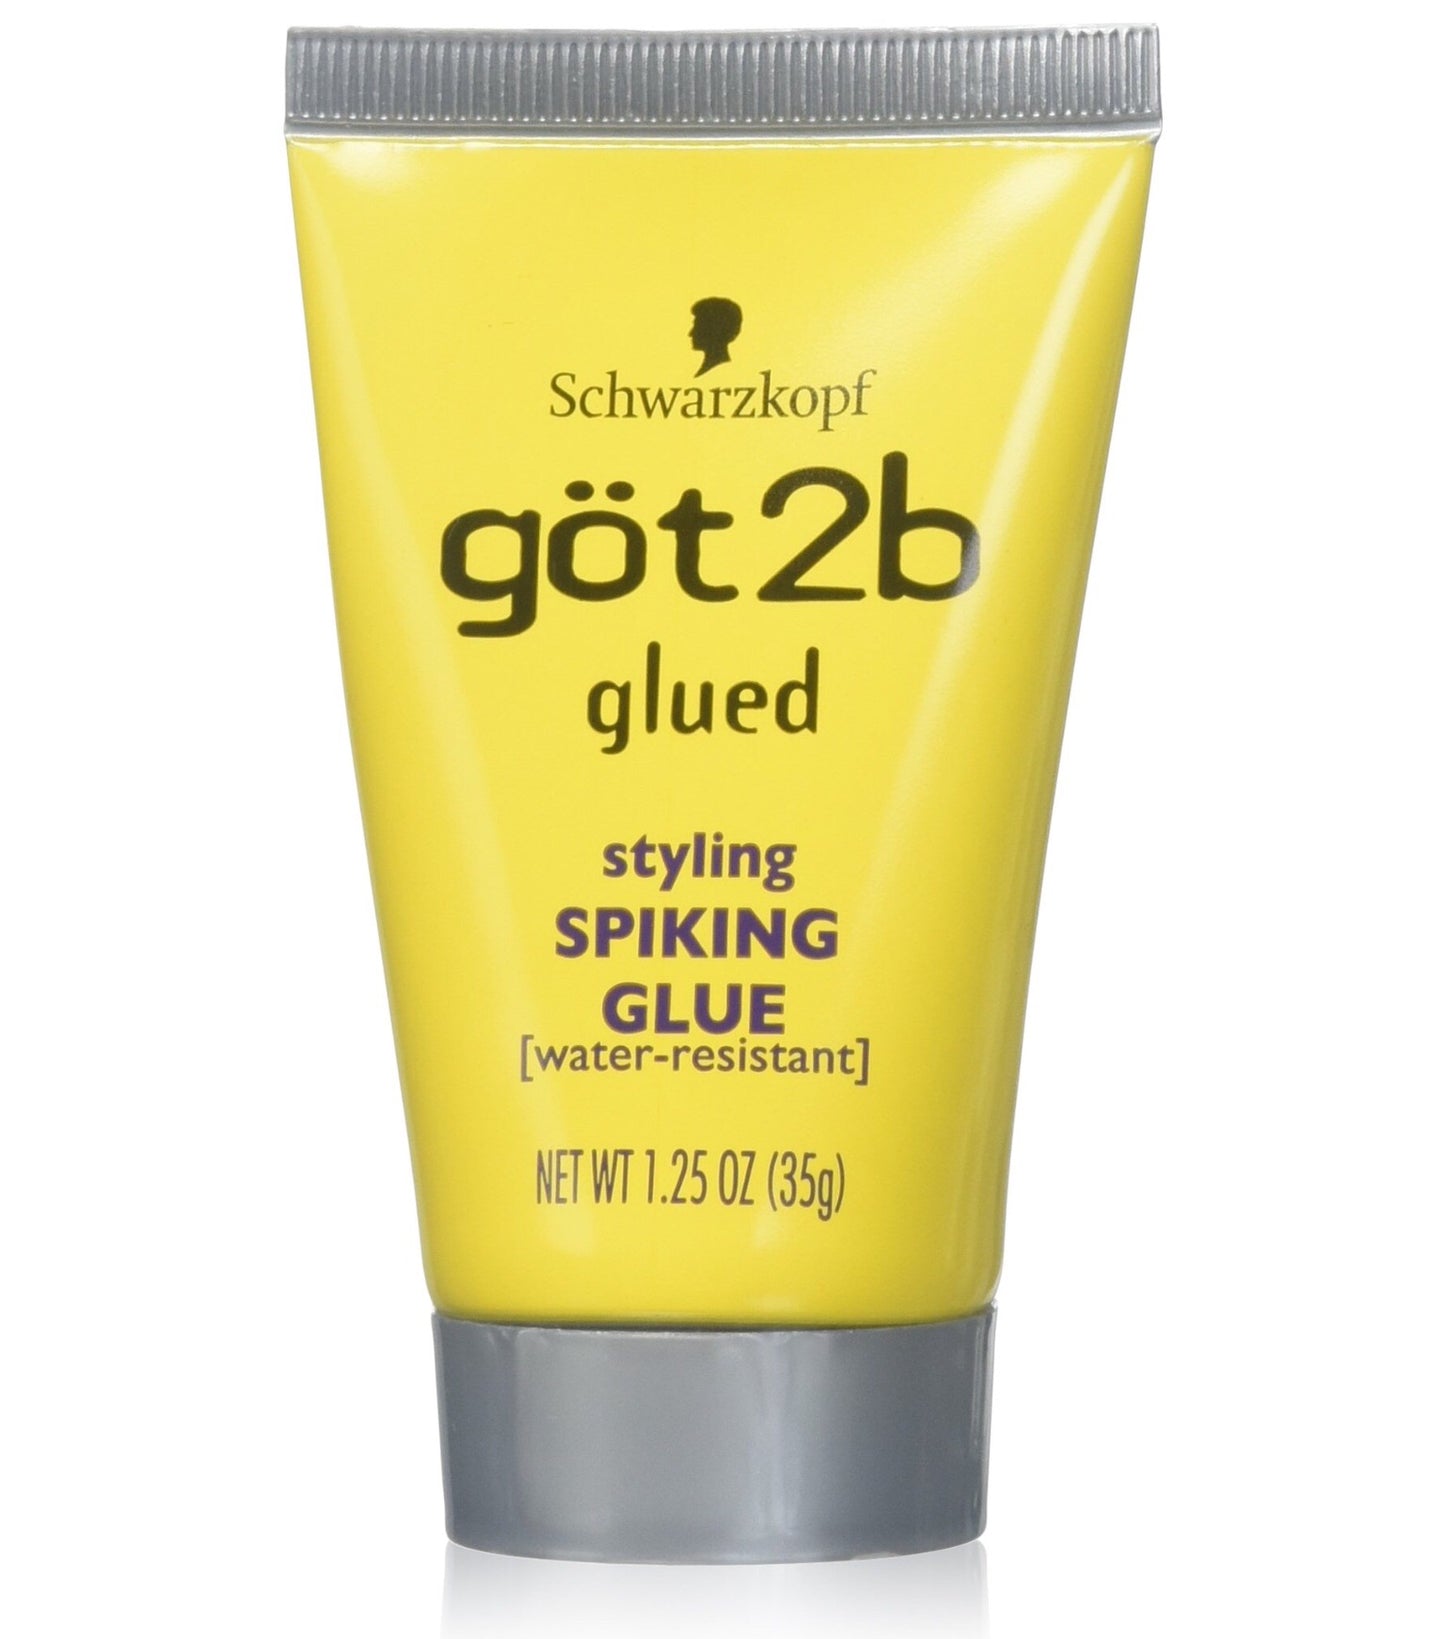 GOT 2b Glued - Styling/Spiking